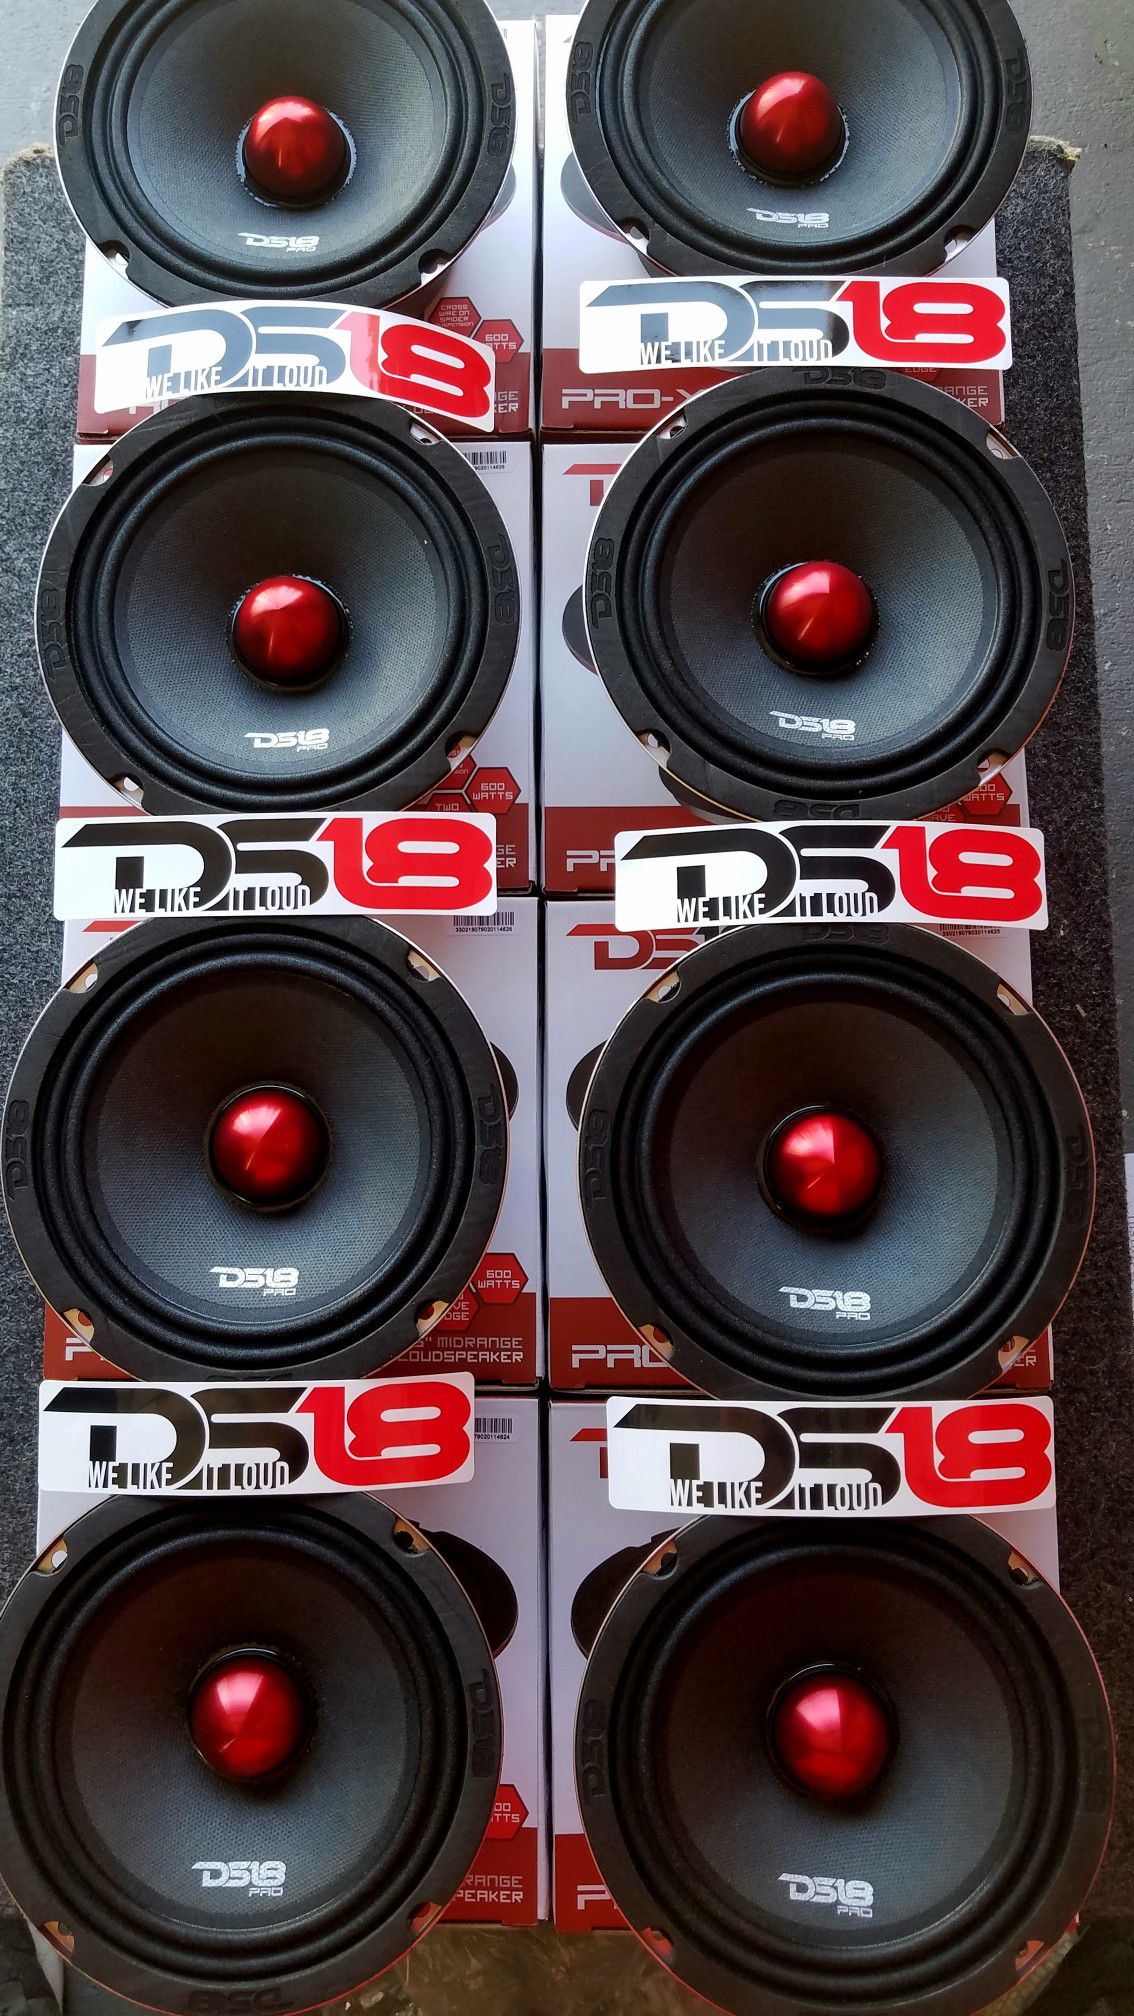 Ds18 Pro X series 600 watts Loud Voice speakers $30 each(1)/Bocinas De voz DS 18 audio $30 cada una(1)